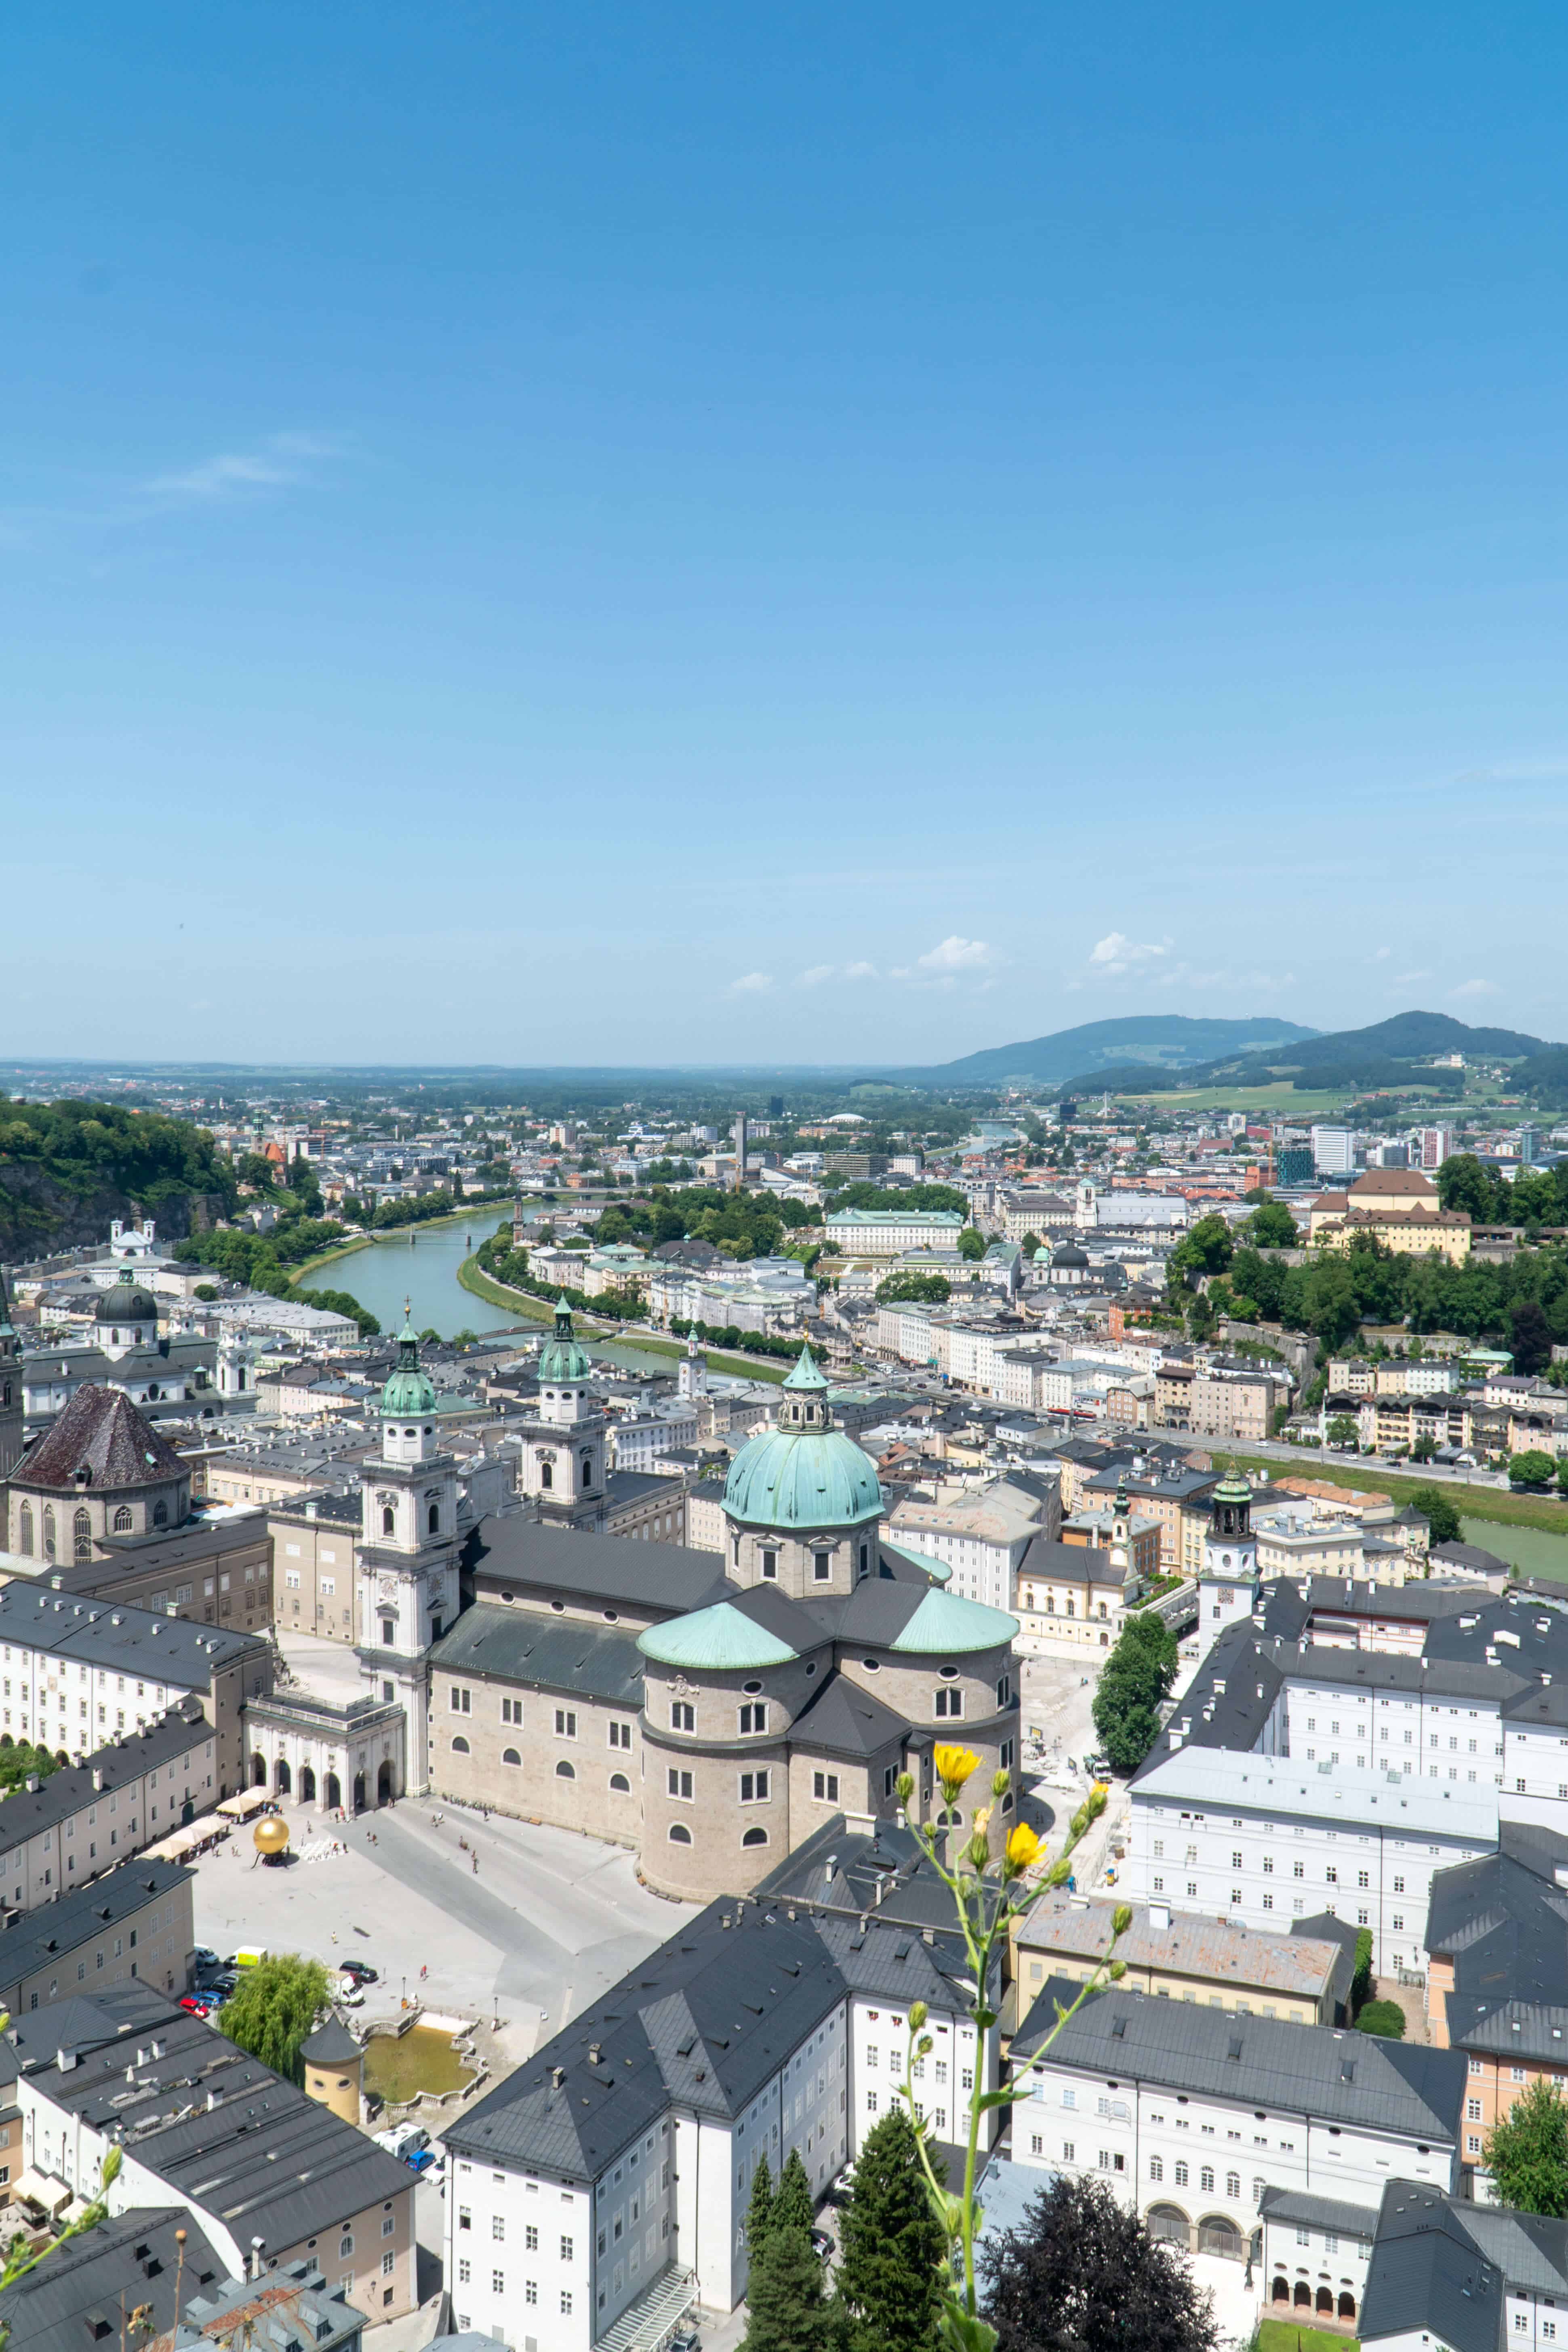 How to Spend One Day in Salzburg Austria | View of Salzburg | The Republic of Rose | #Travel #Salzburg #Austria #Europe